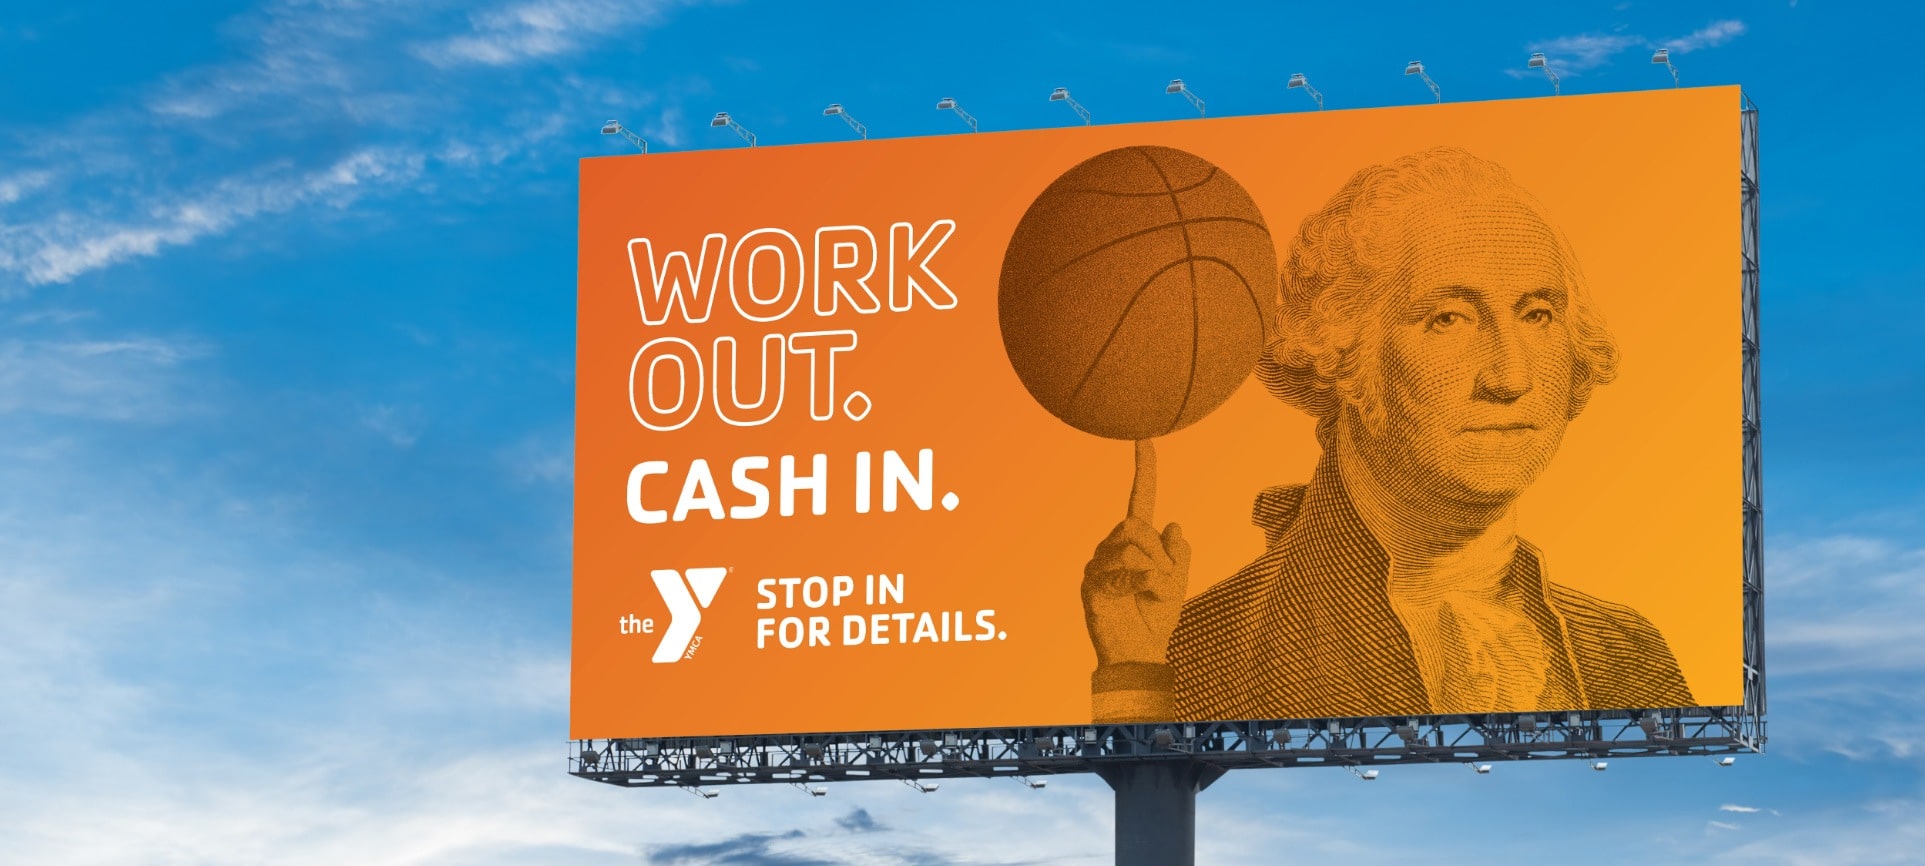 Work Out Cash In Billboard